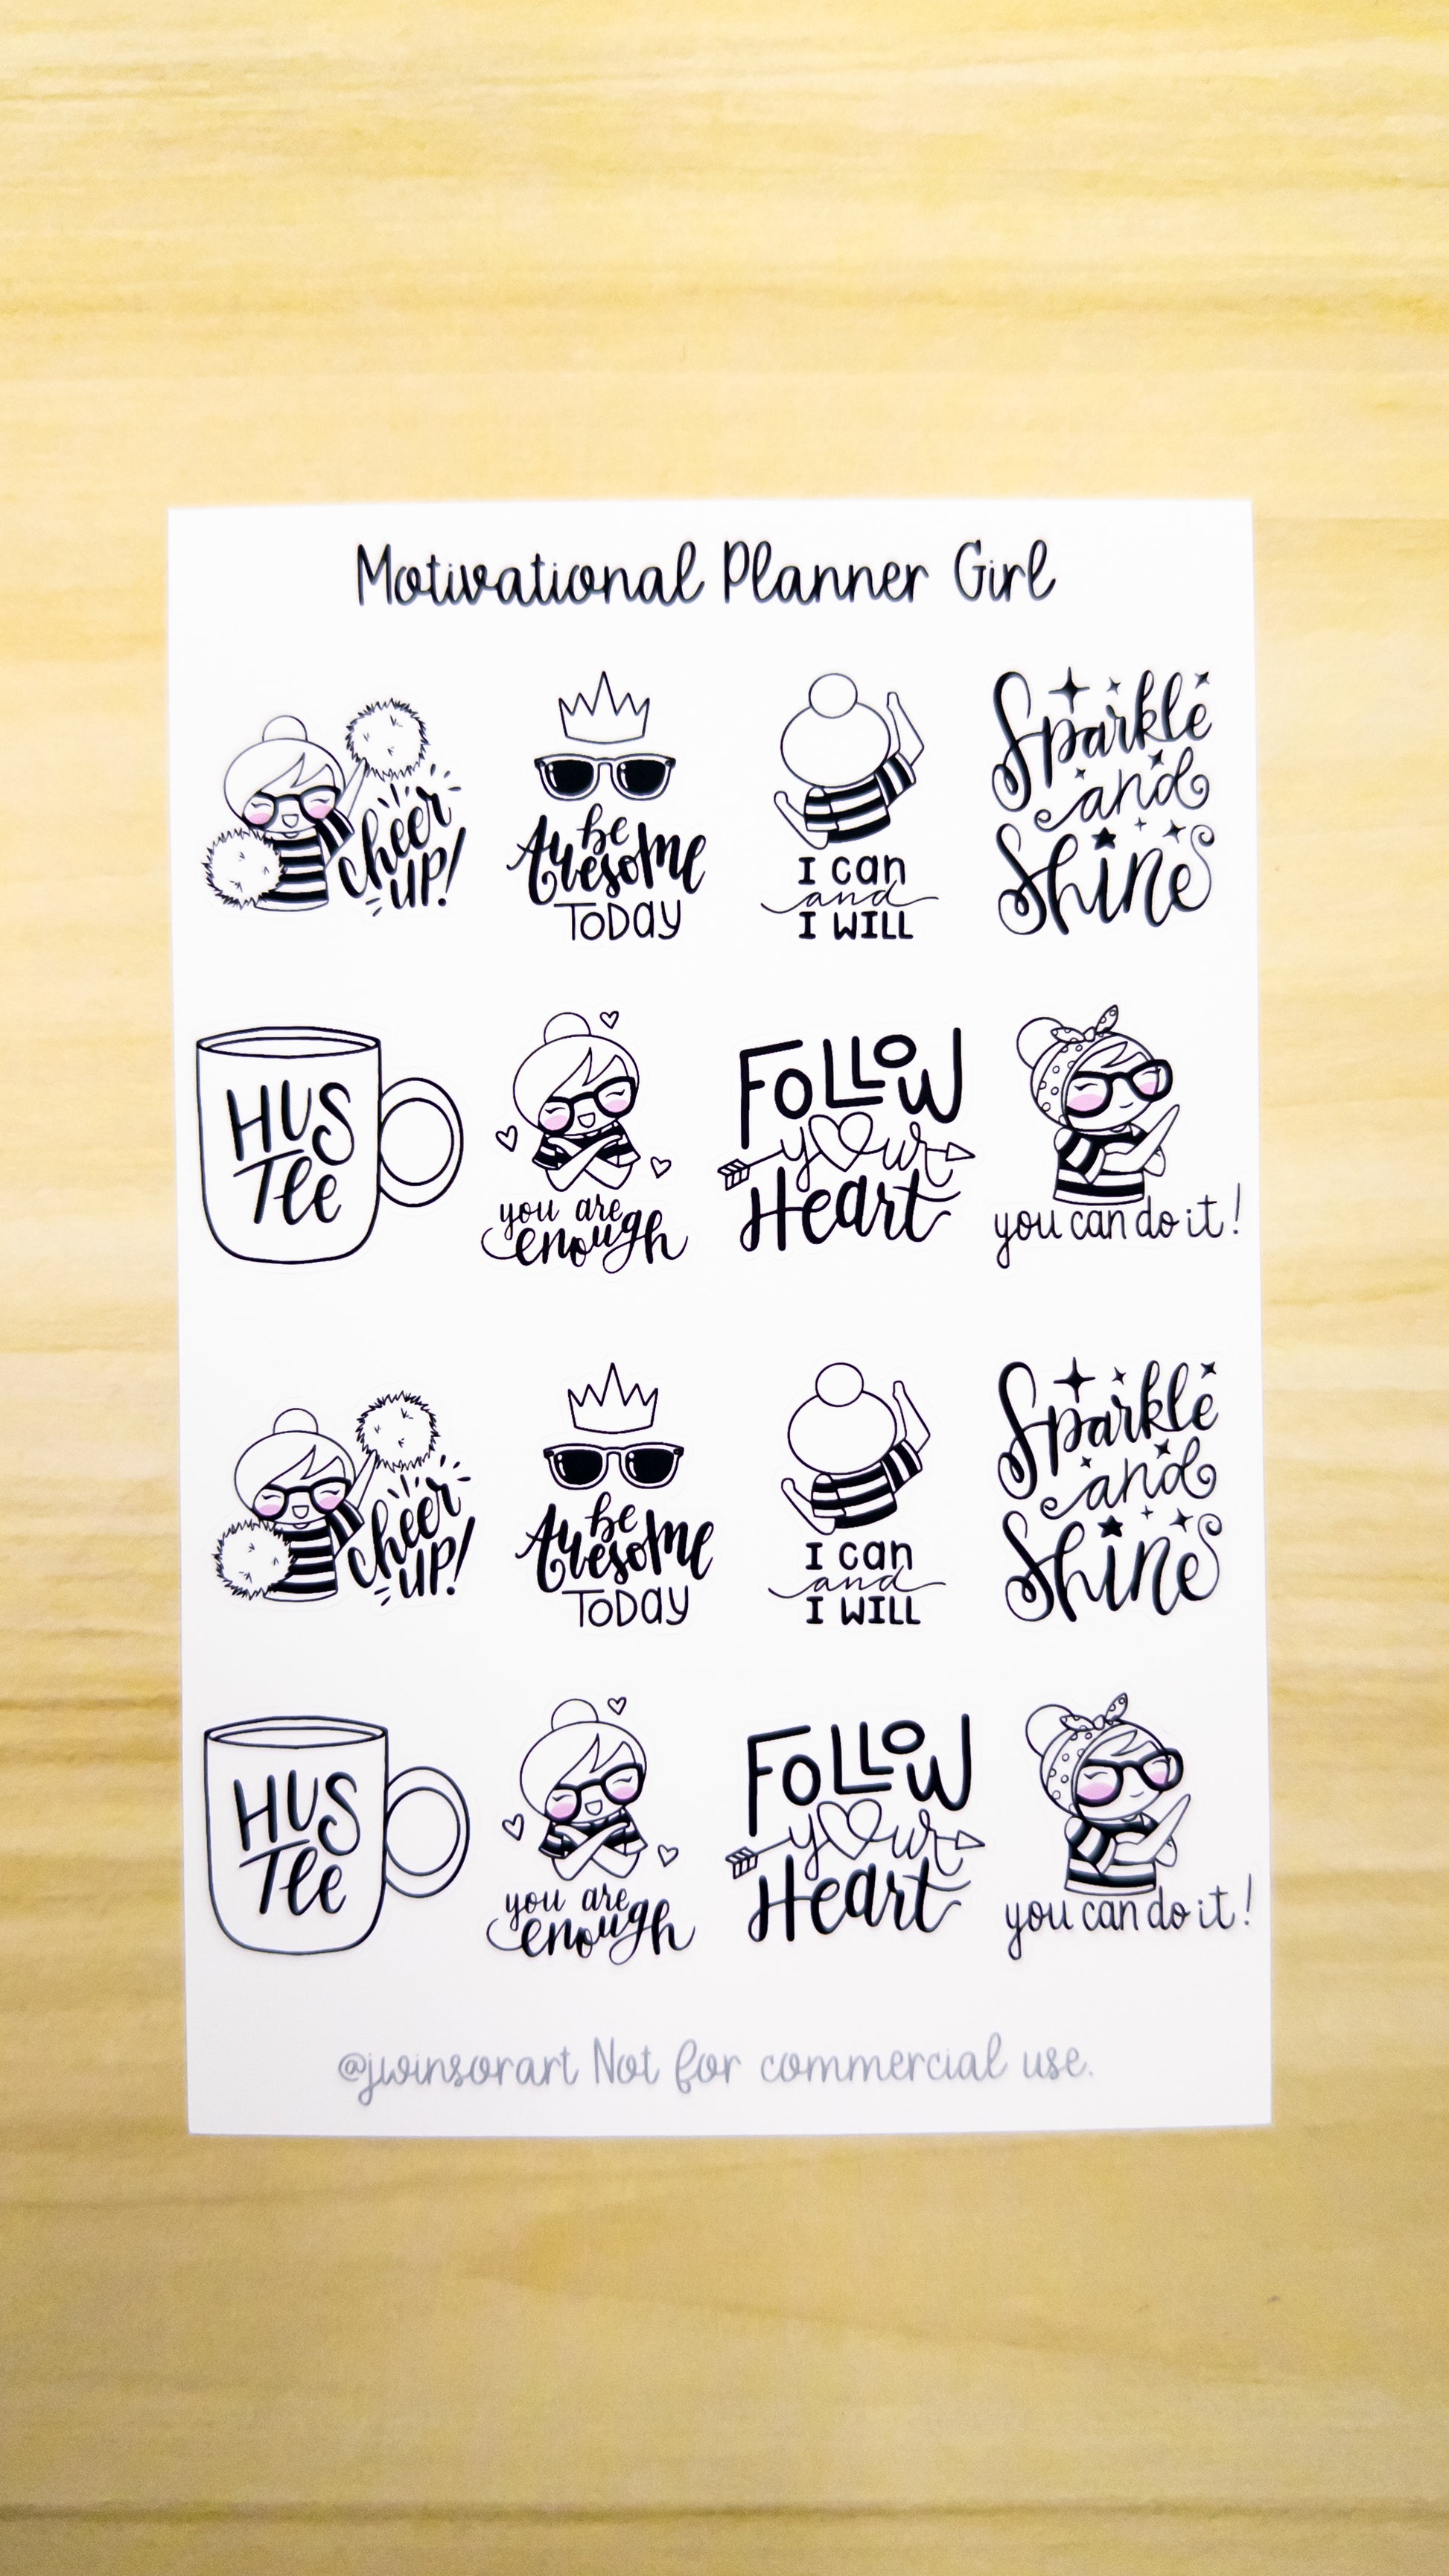 Heart Sticker Sheet Minimalist Stickers Hobonichi Icon Stickers